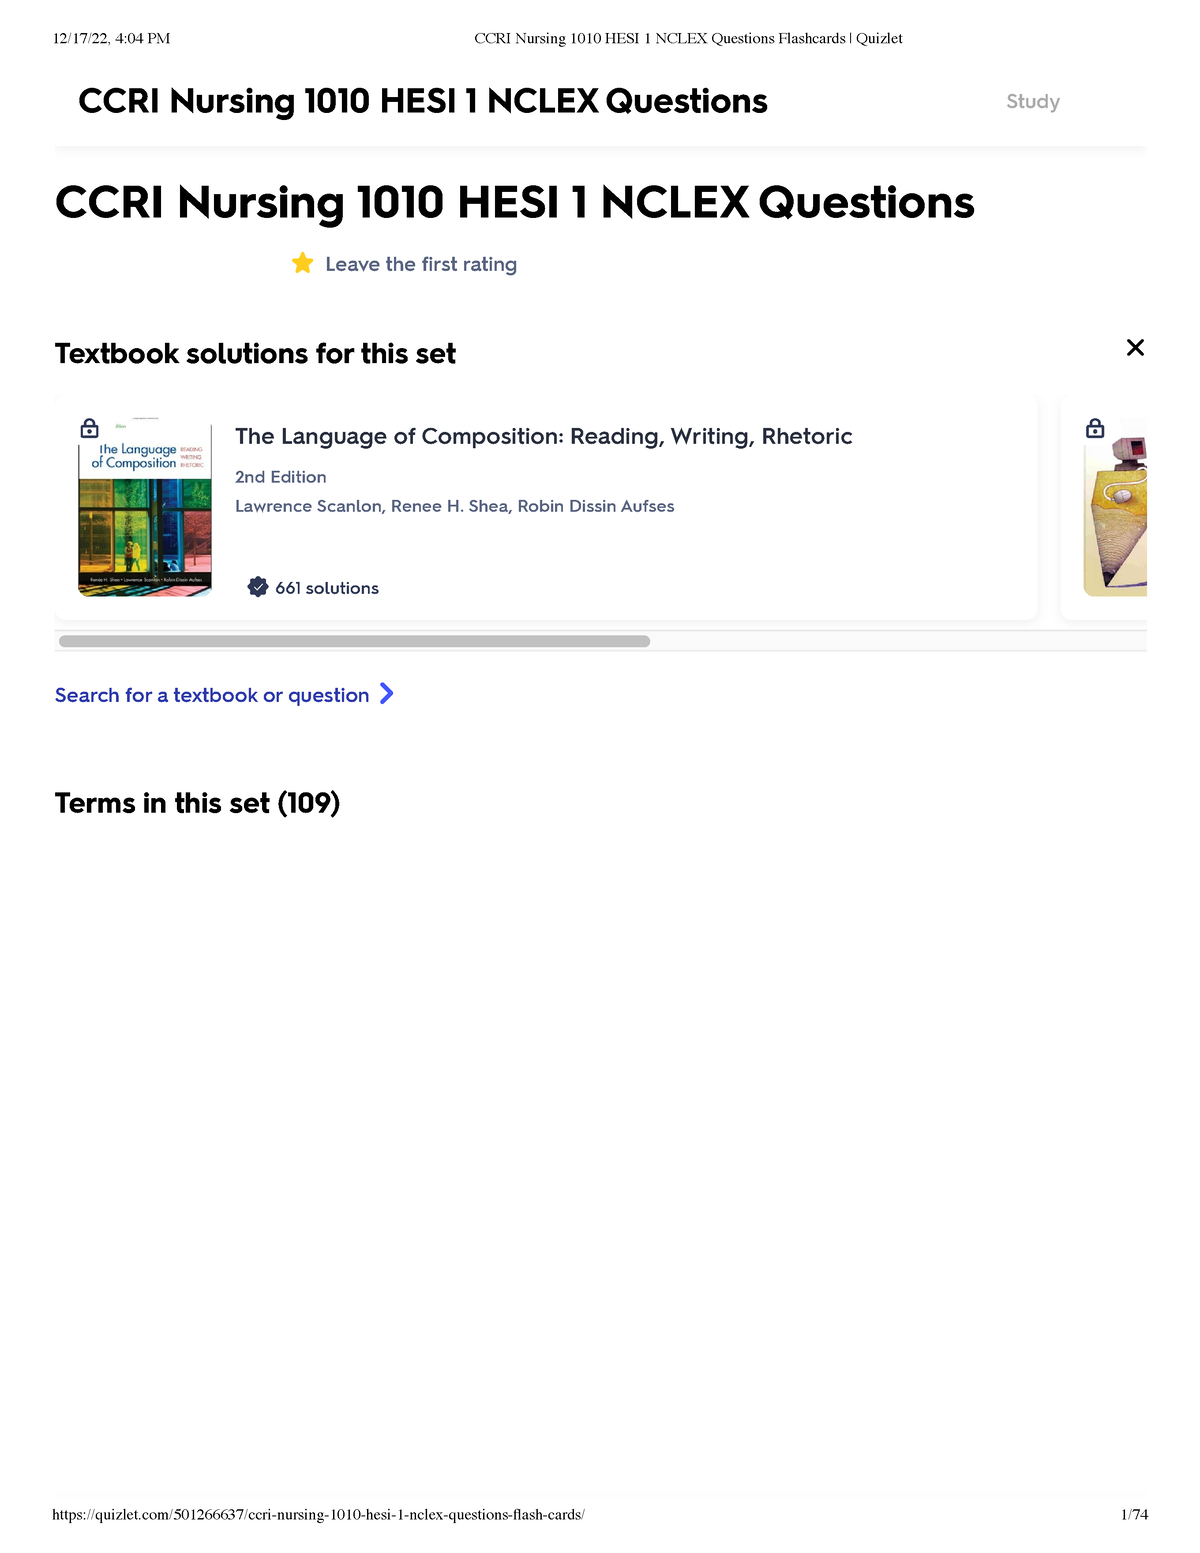 CCRI Nursing 1010 HESI 1 Nclex Questions Flashcards Quizlet CCRI